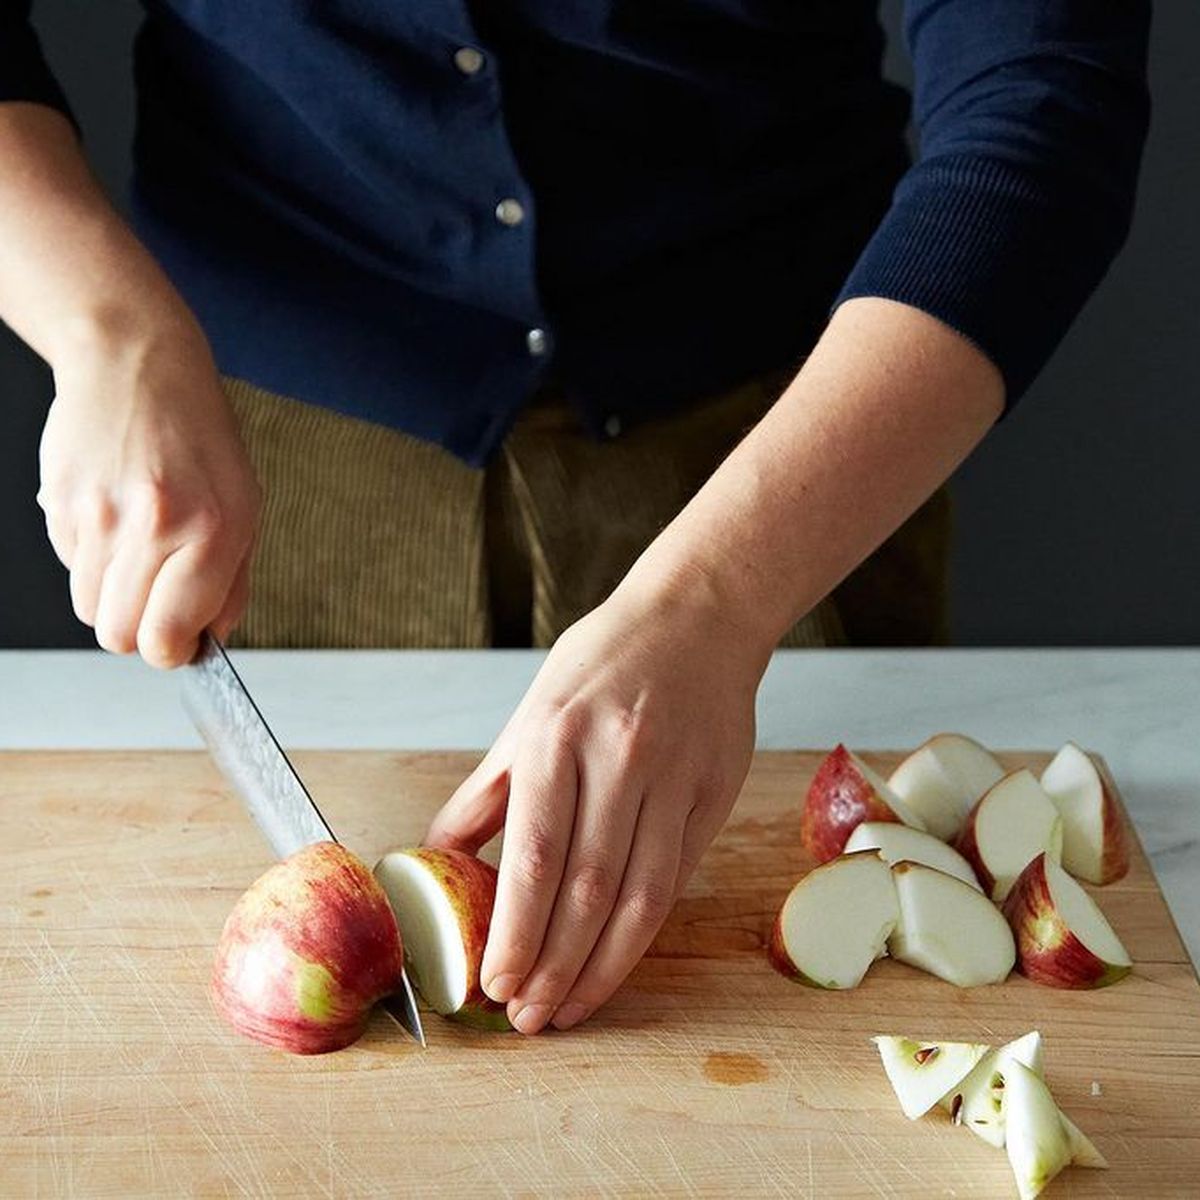 Deb Perelman S Apple Cake Recipe From Smitten Kitchen